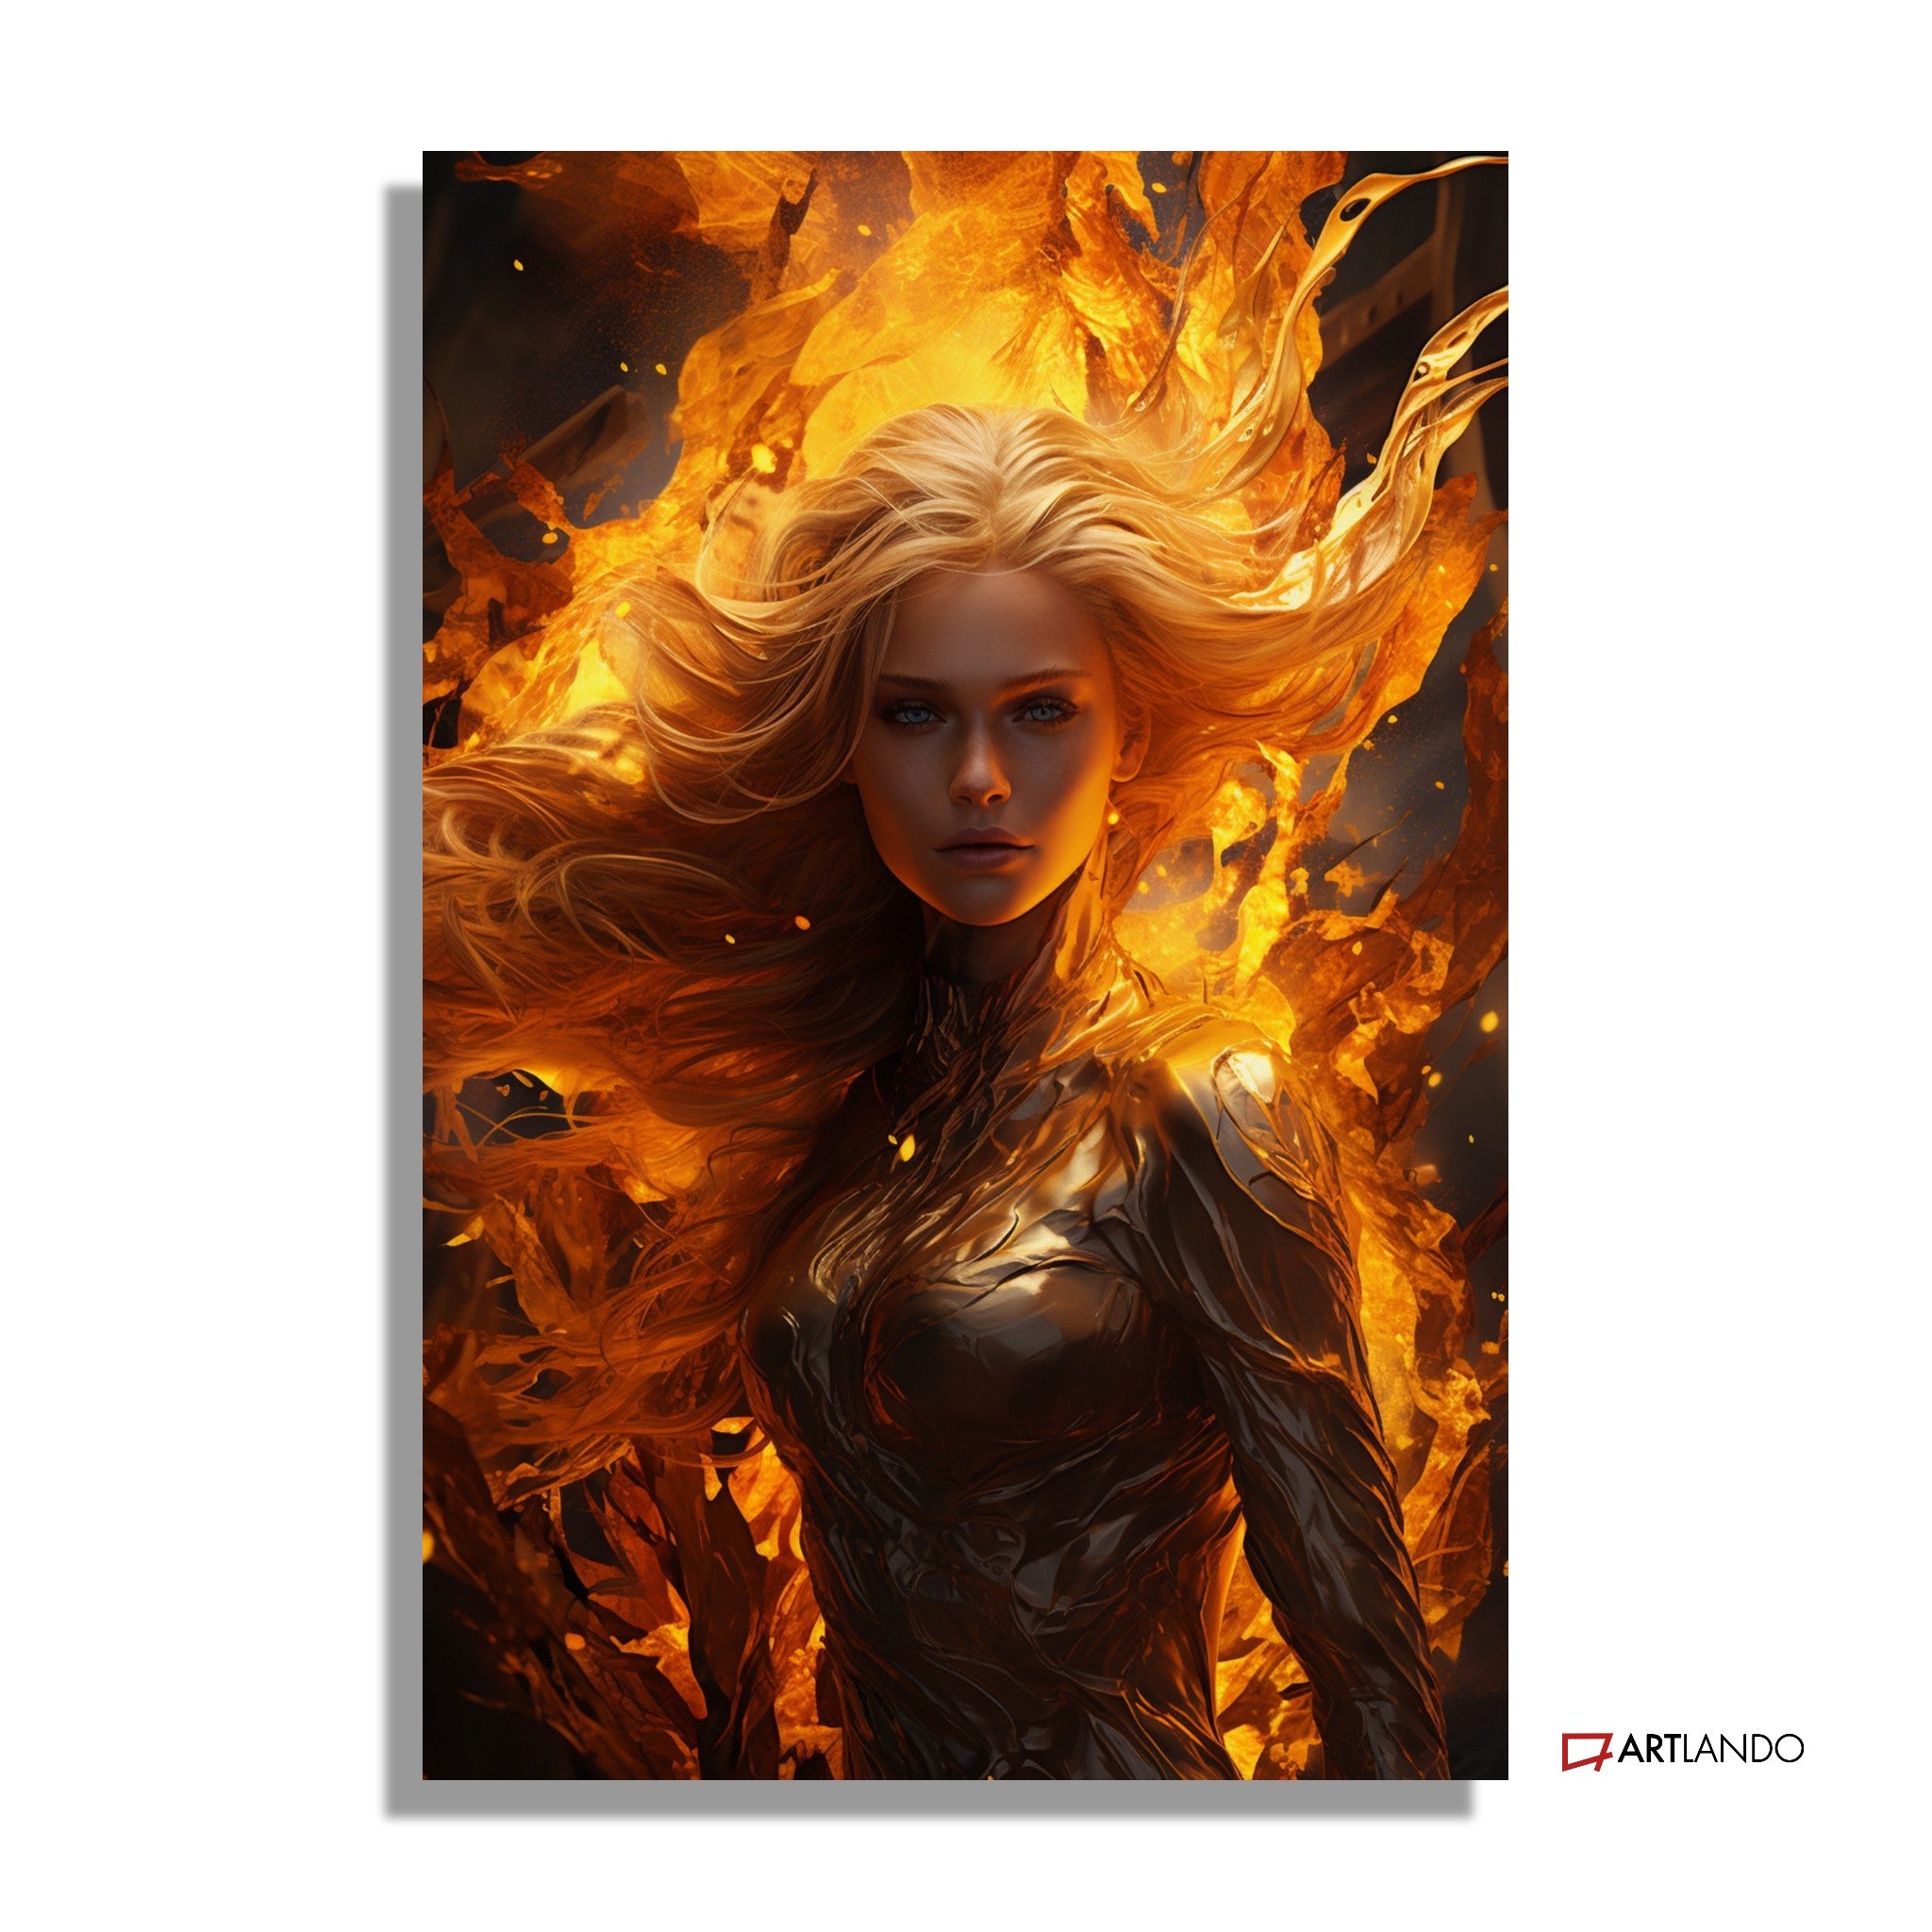 Sonnen-Heldin steht in Flammen